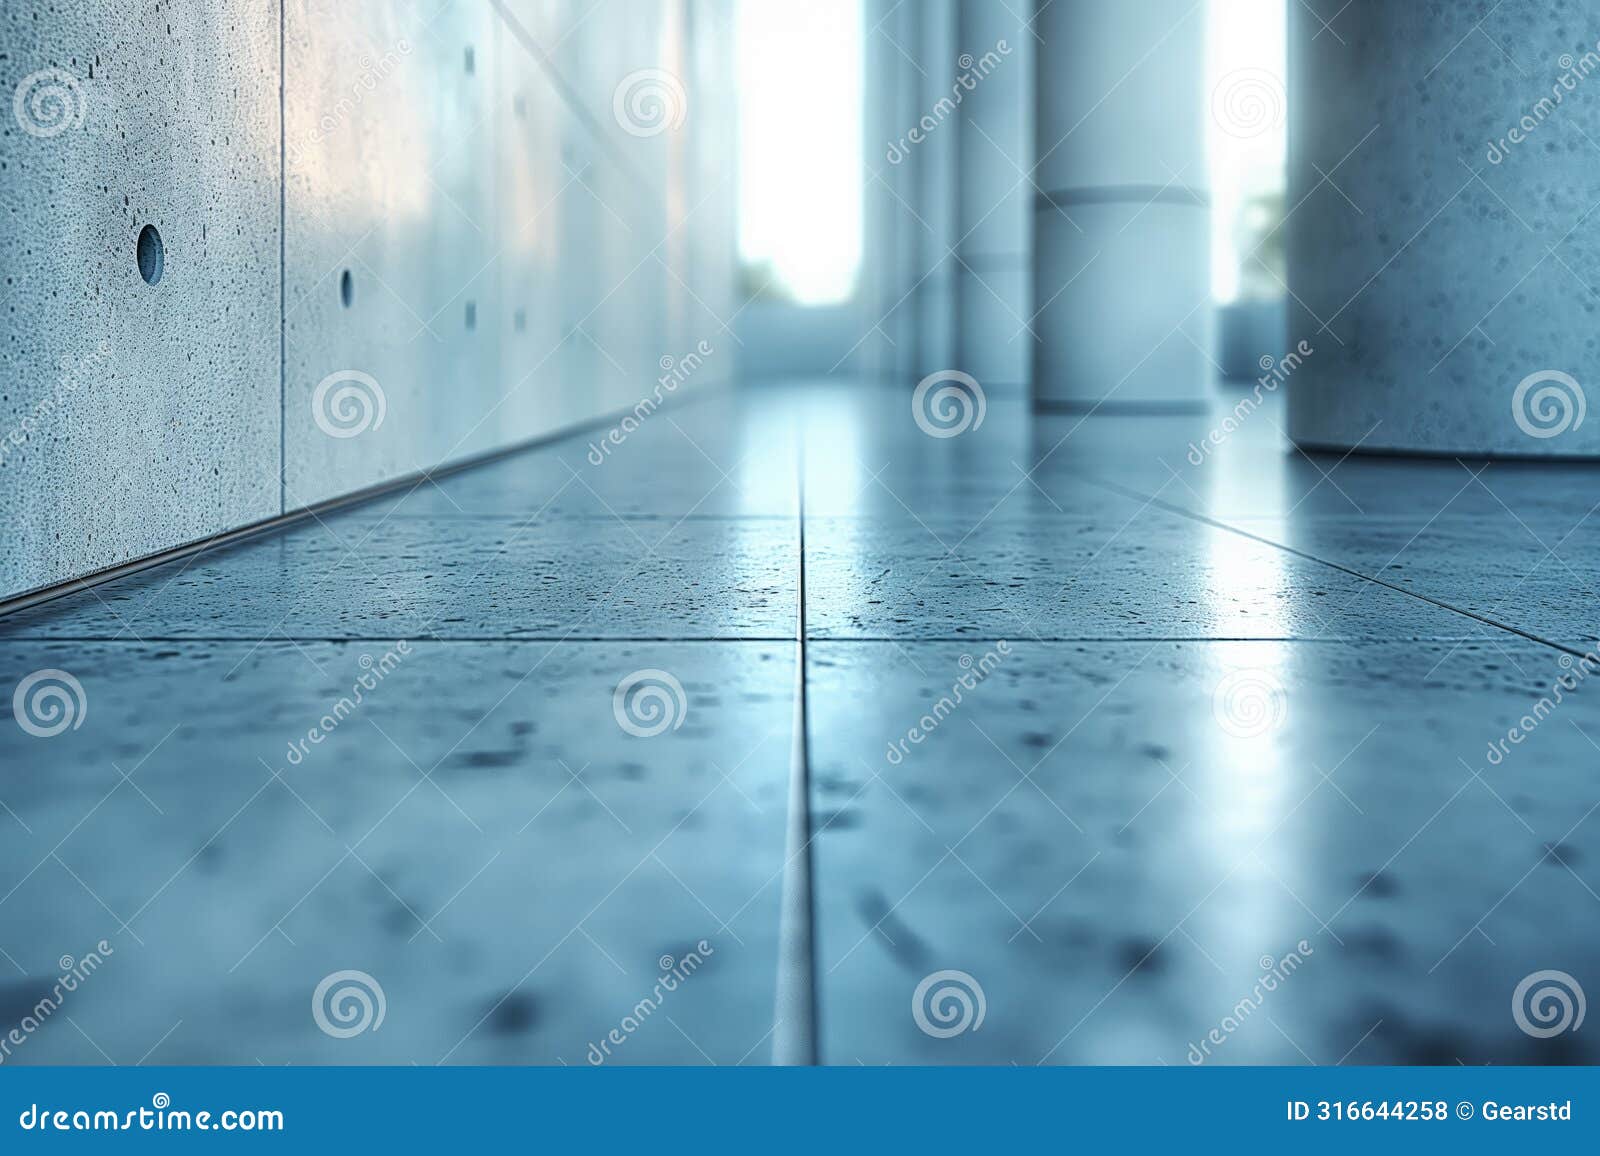 contemporary hallway with sleek floor